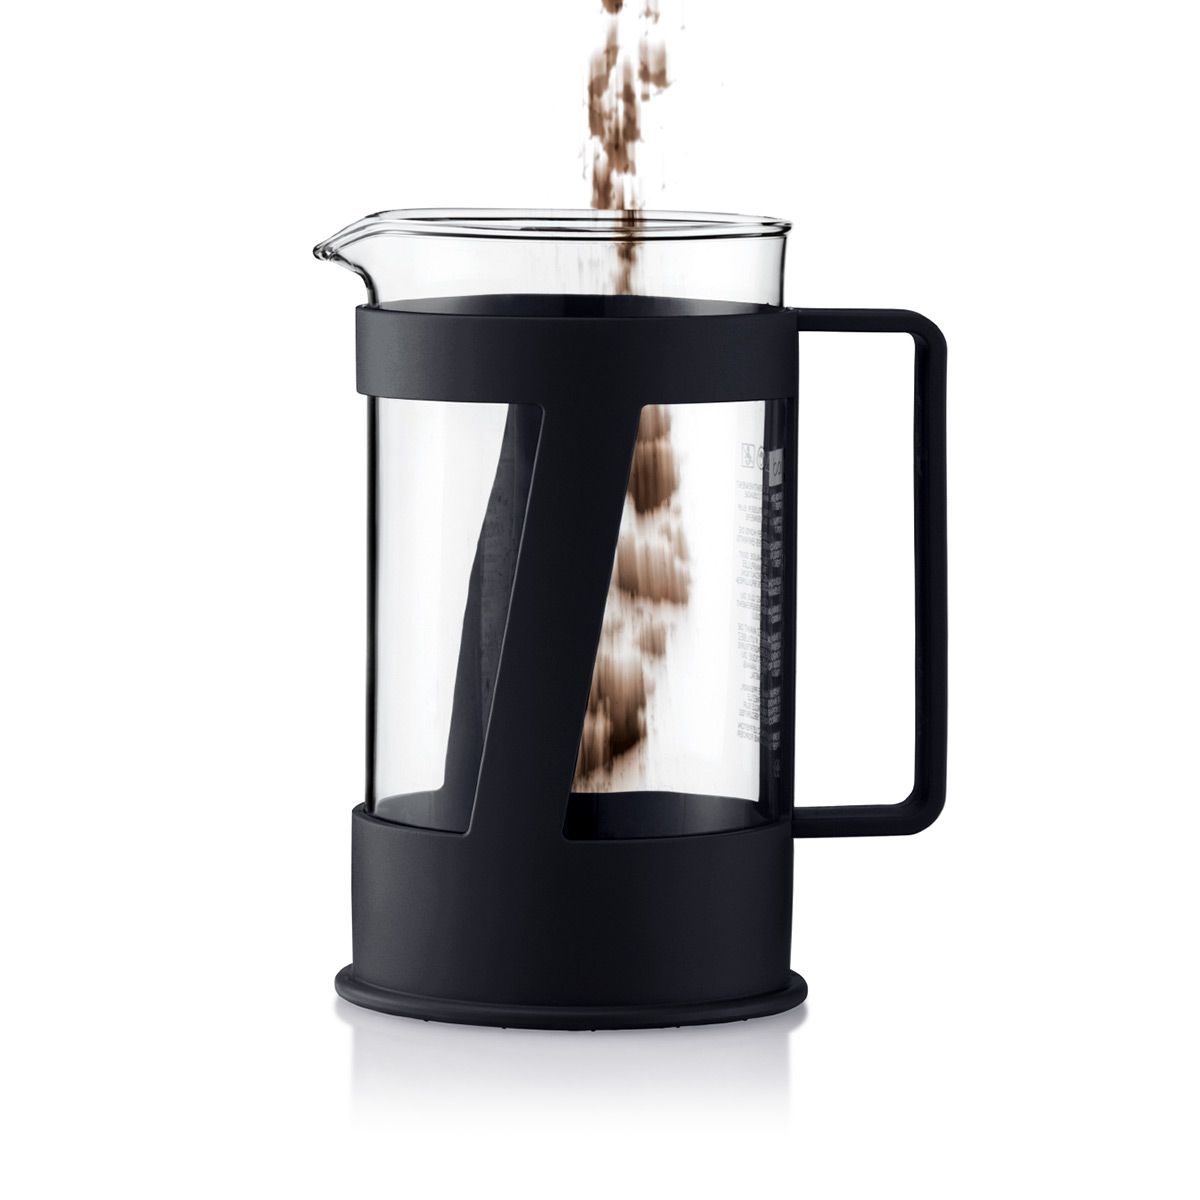 Bodum Crema Coffee Maker Black, 8 Cups